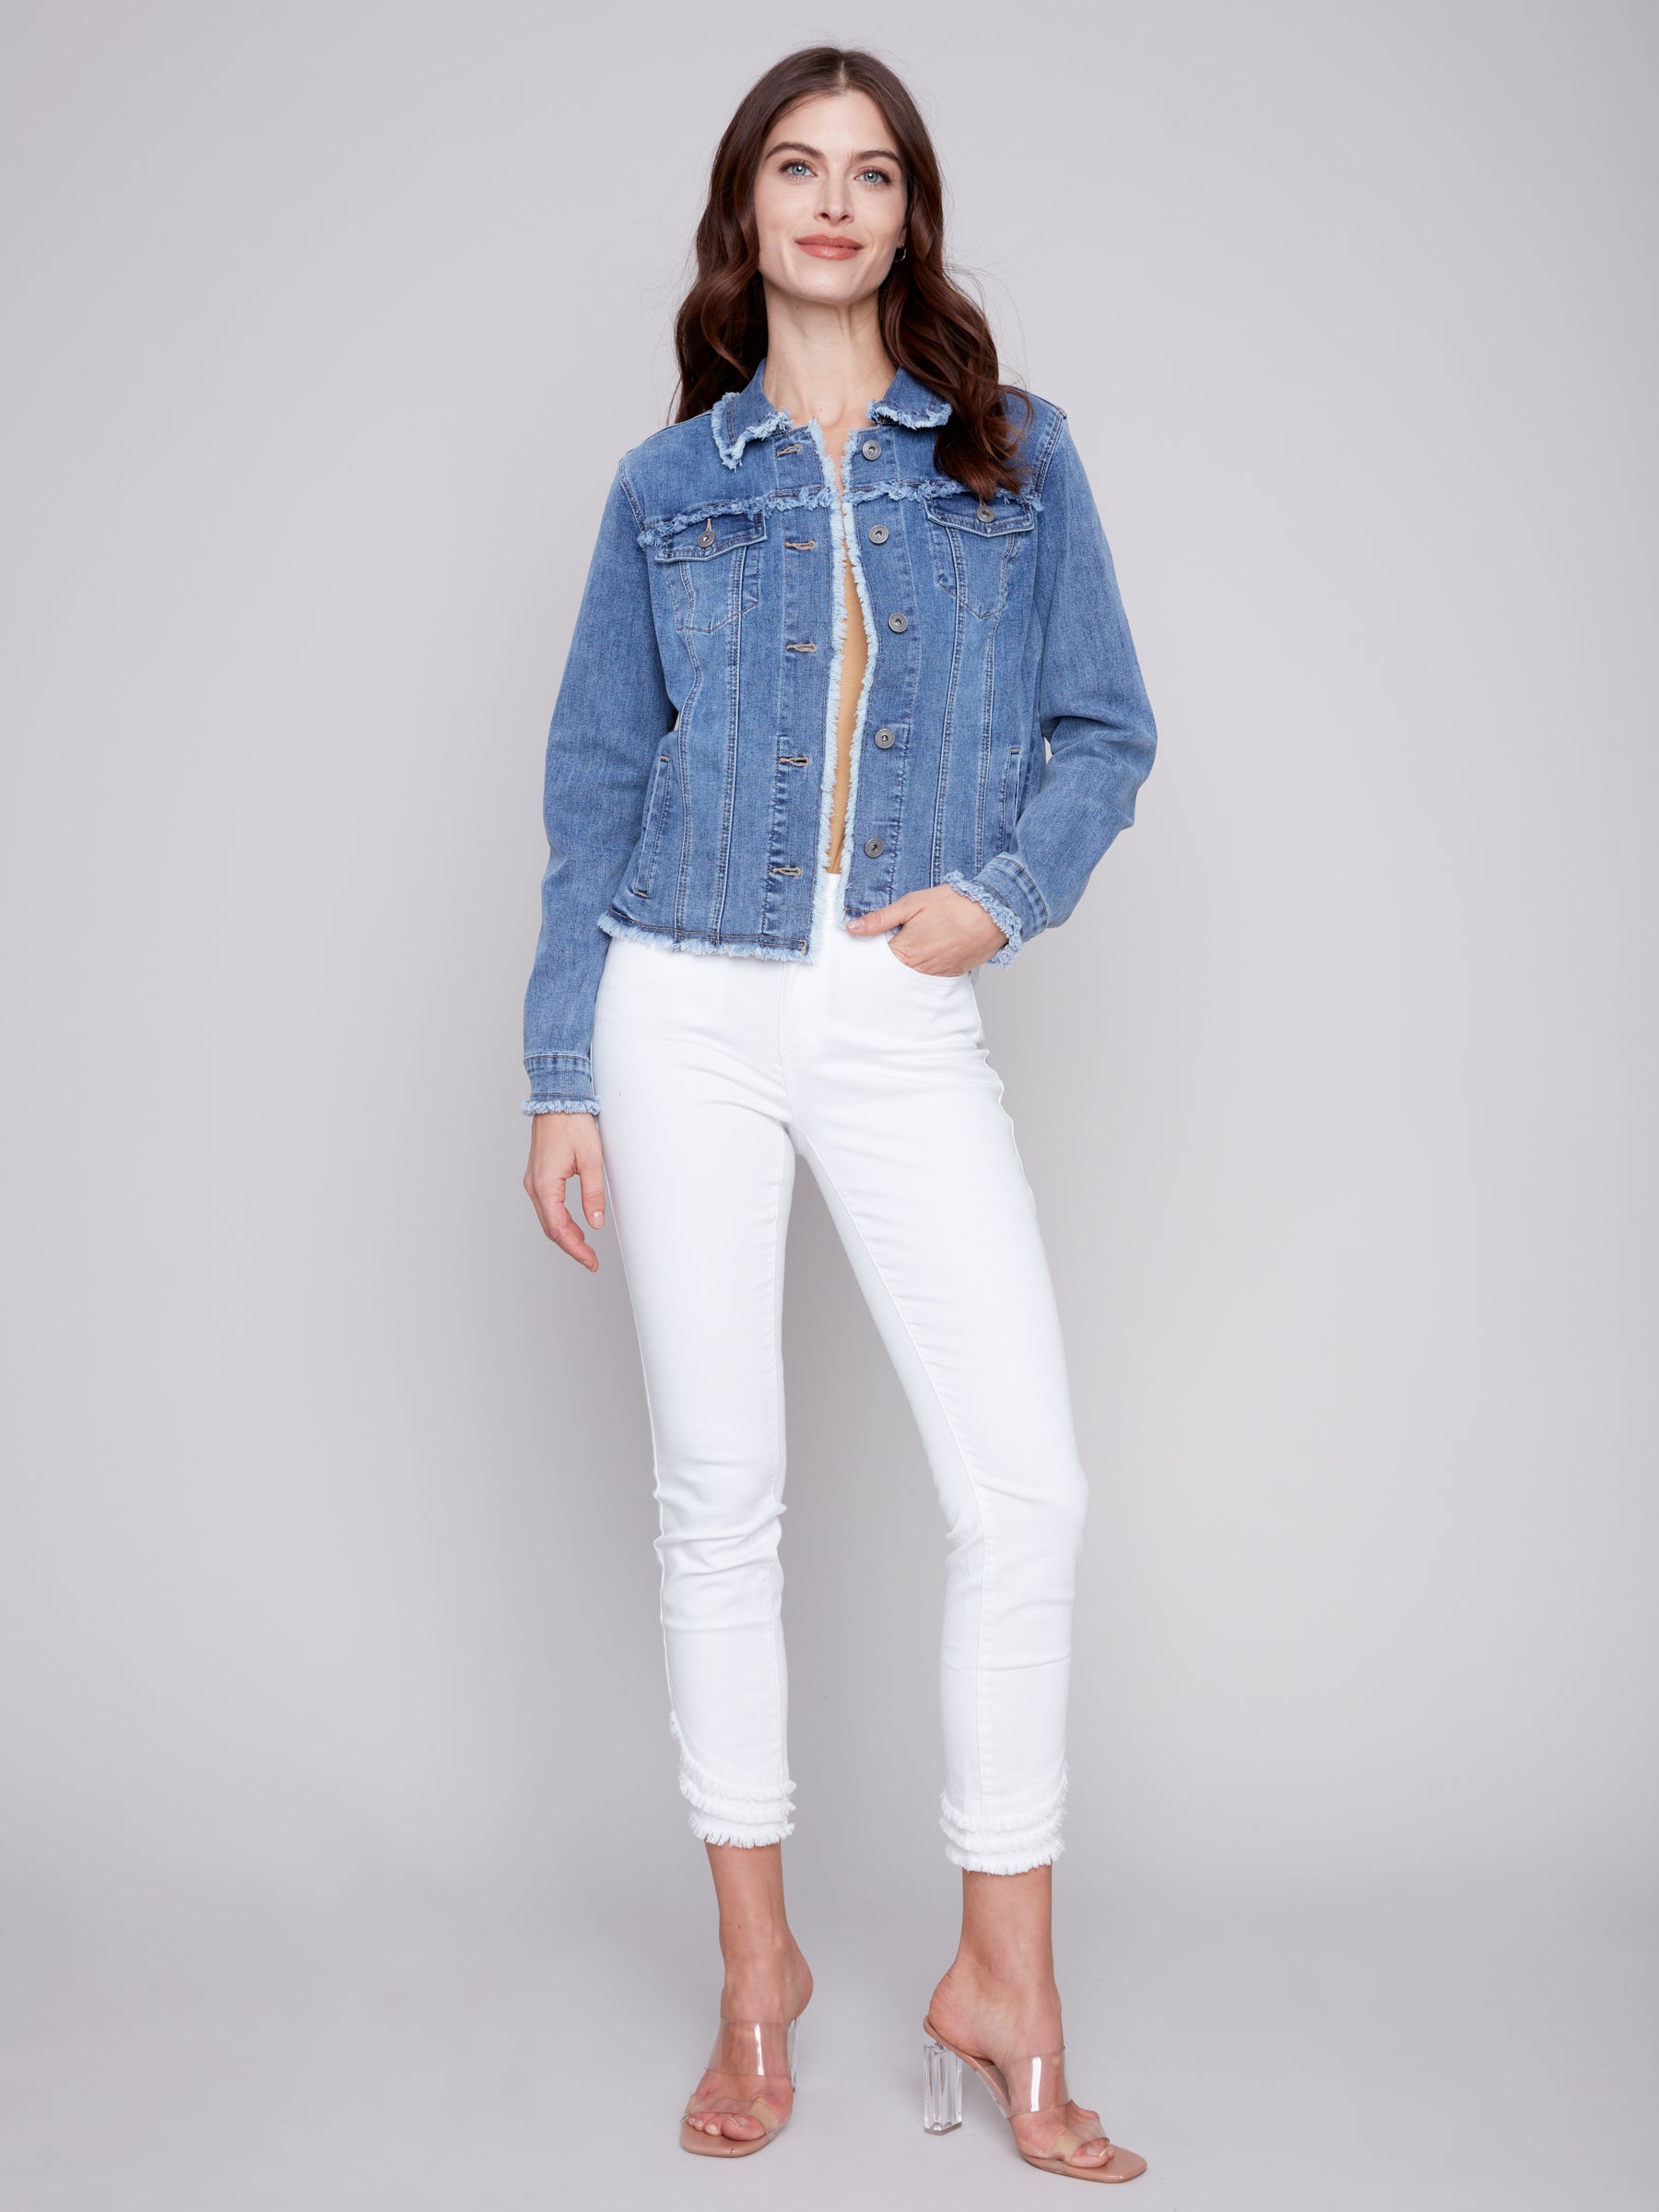 Jeans jacket Charlie B C6233-BLUE-MEDIUM